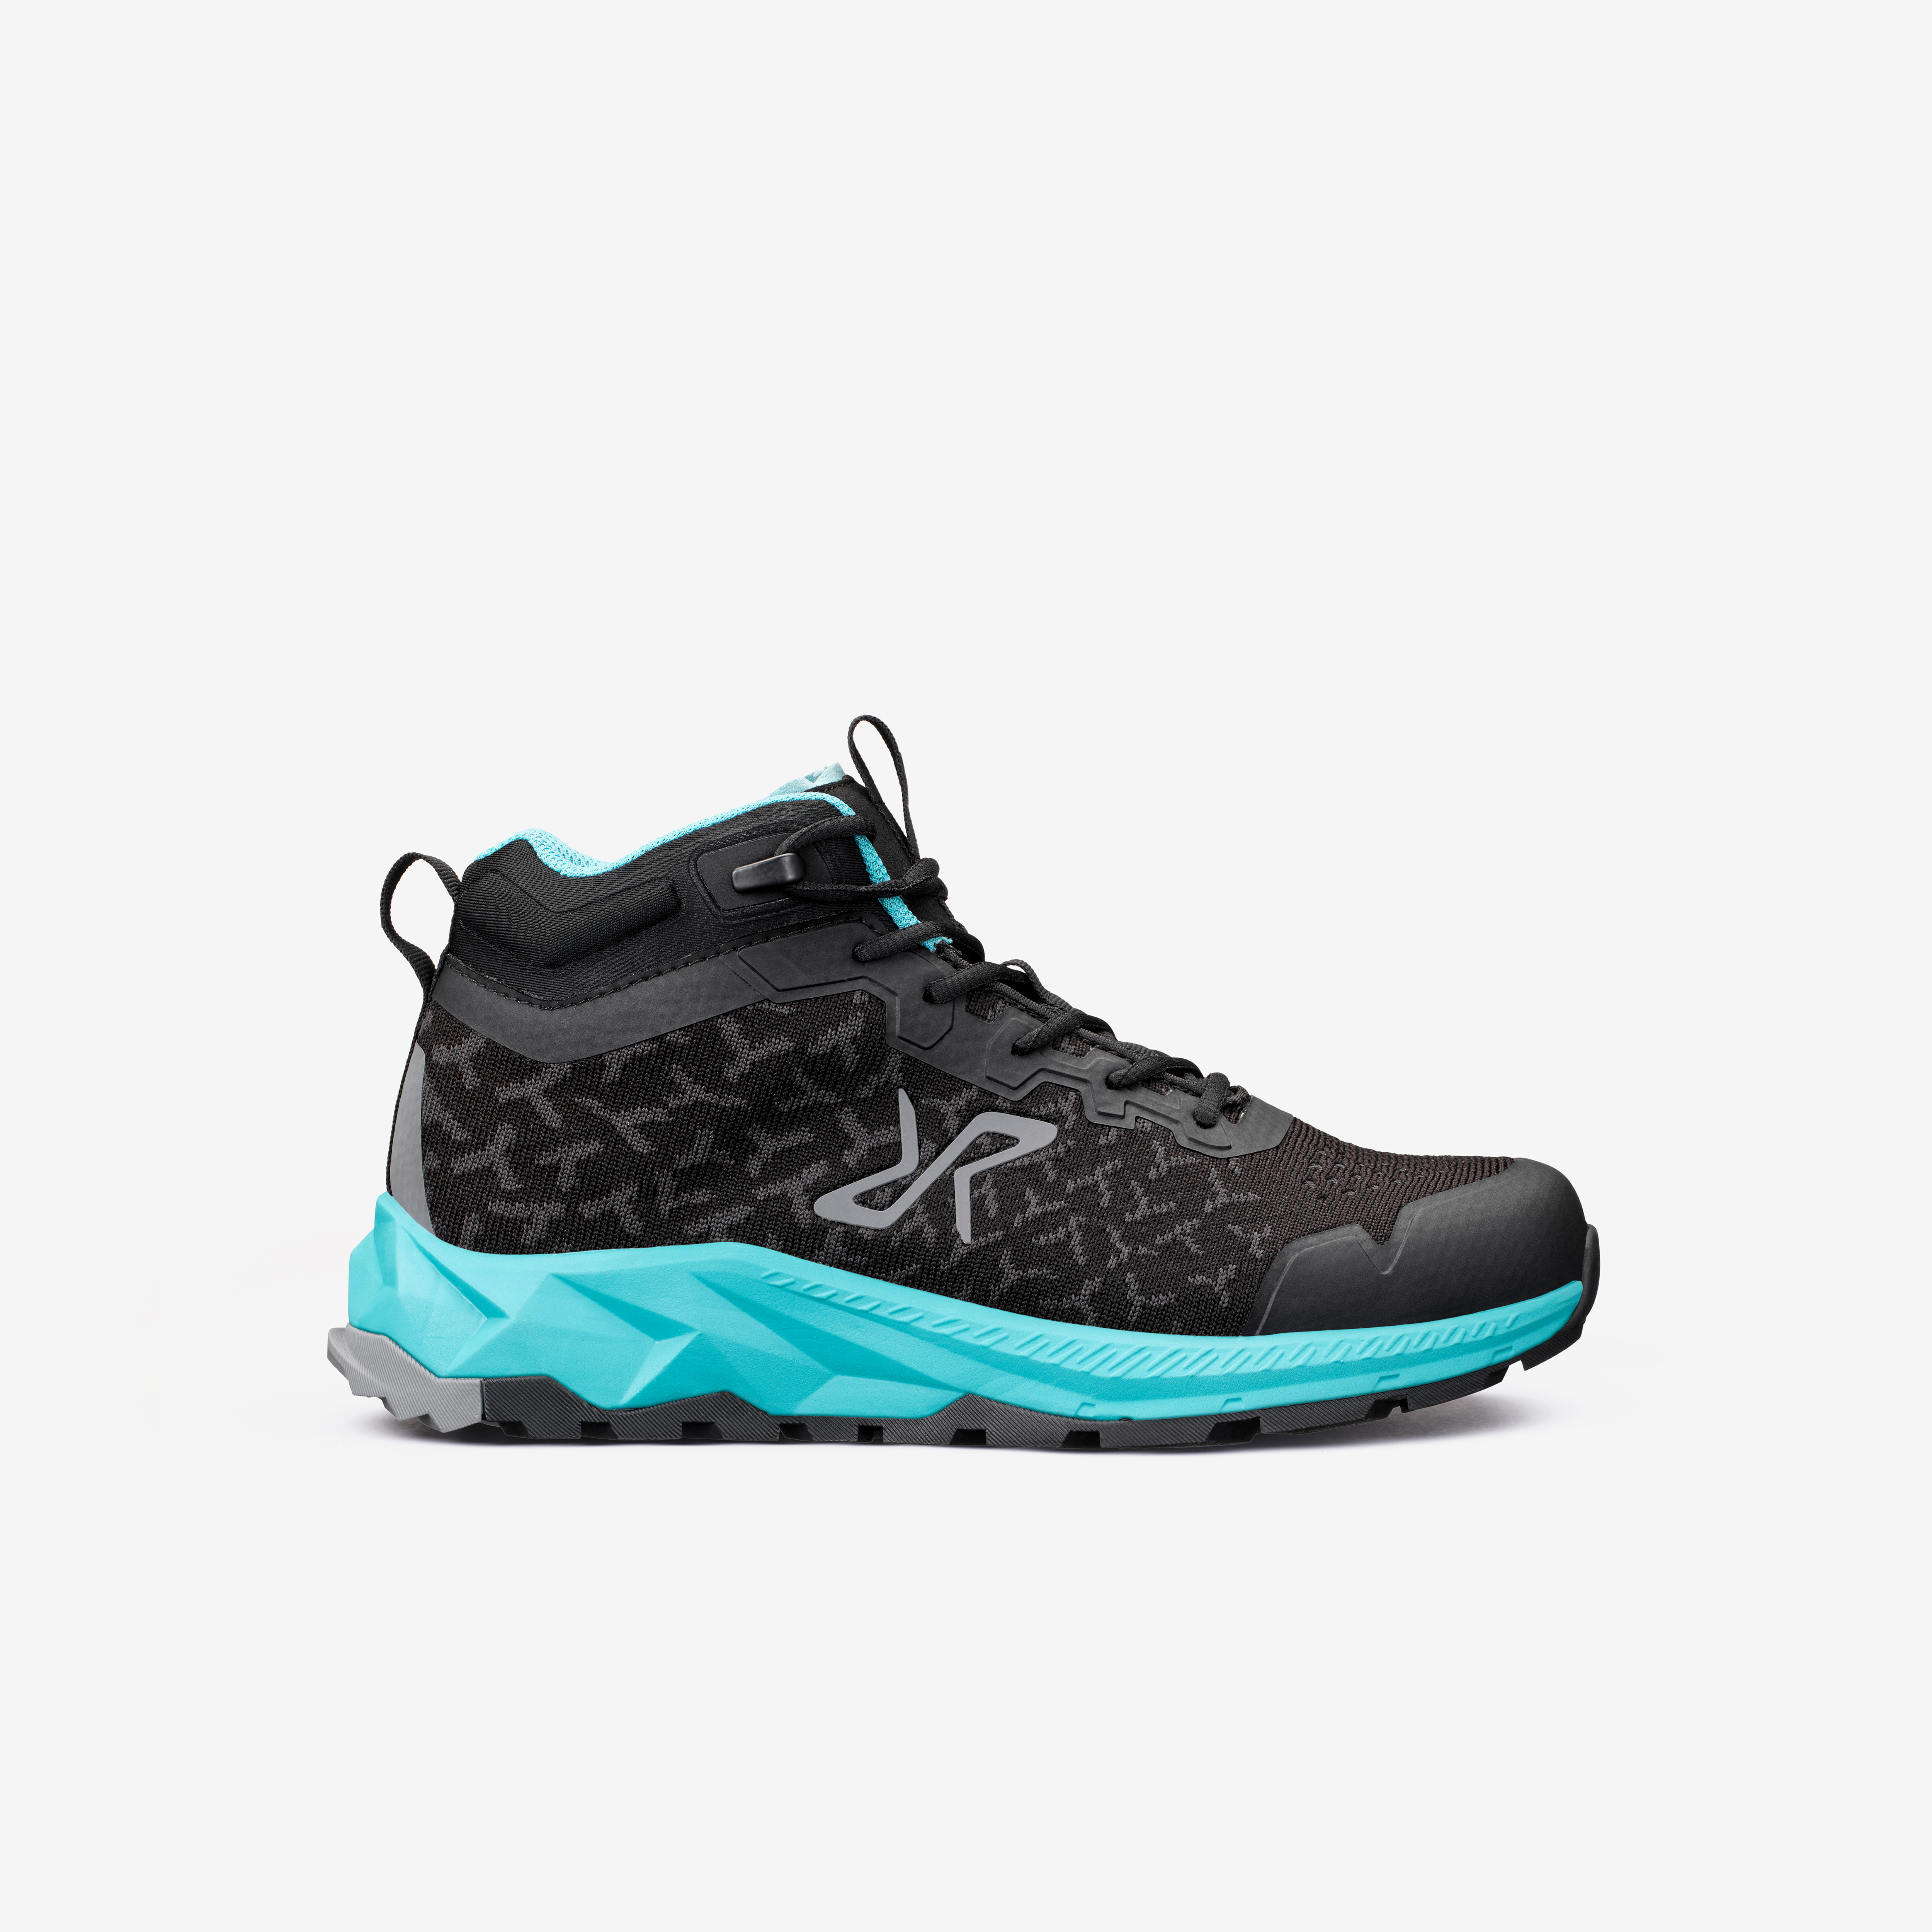 Trailknit Waterproof Mid Hiking Shoes Black/Turquoise Women